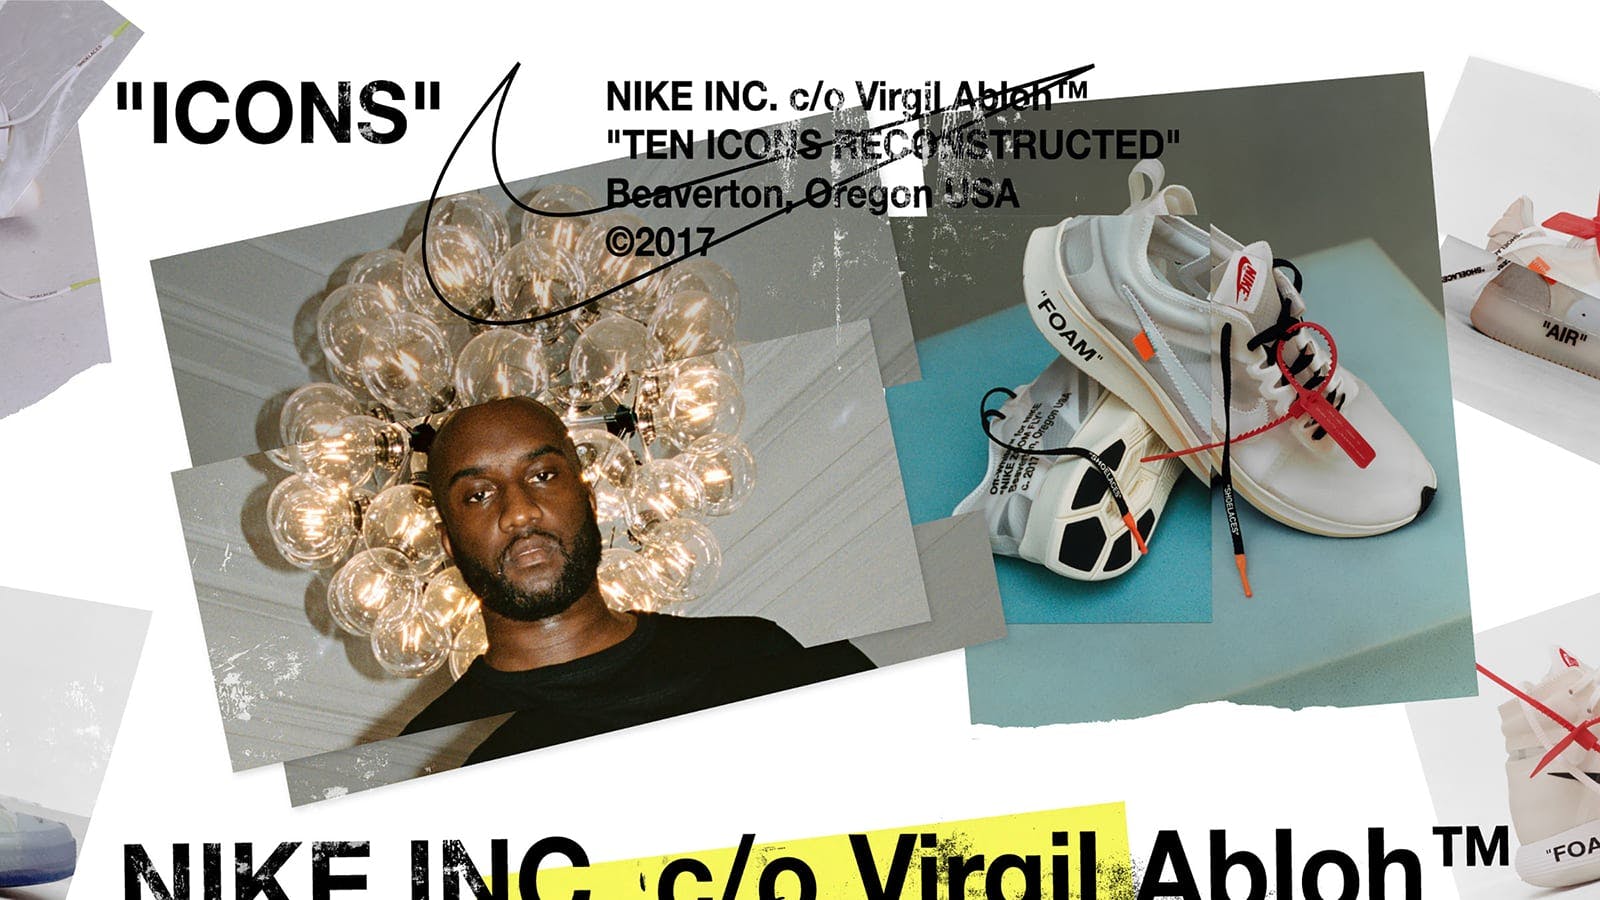 Win All 10 Virgil Abloh x Nike Sneakers Raffle